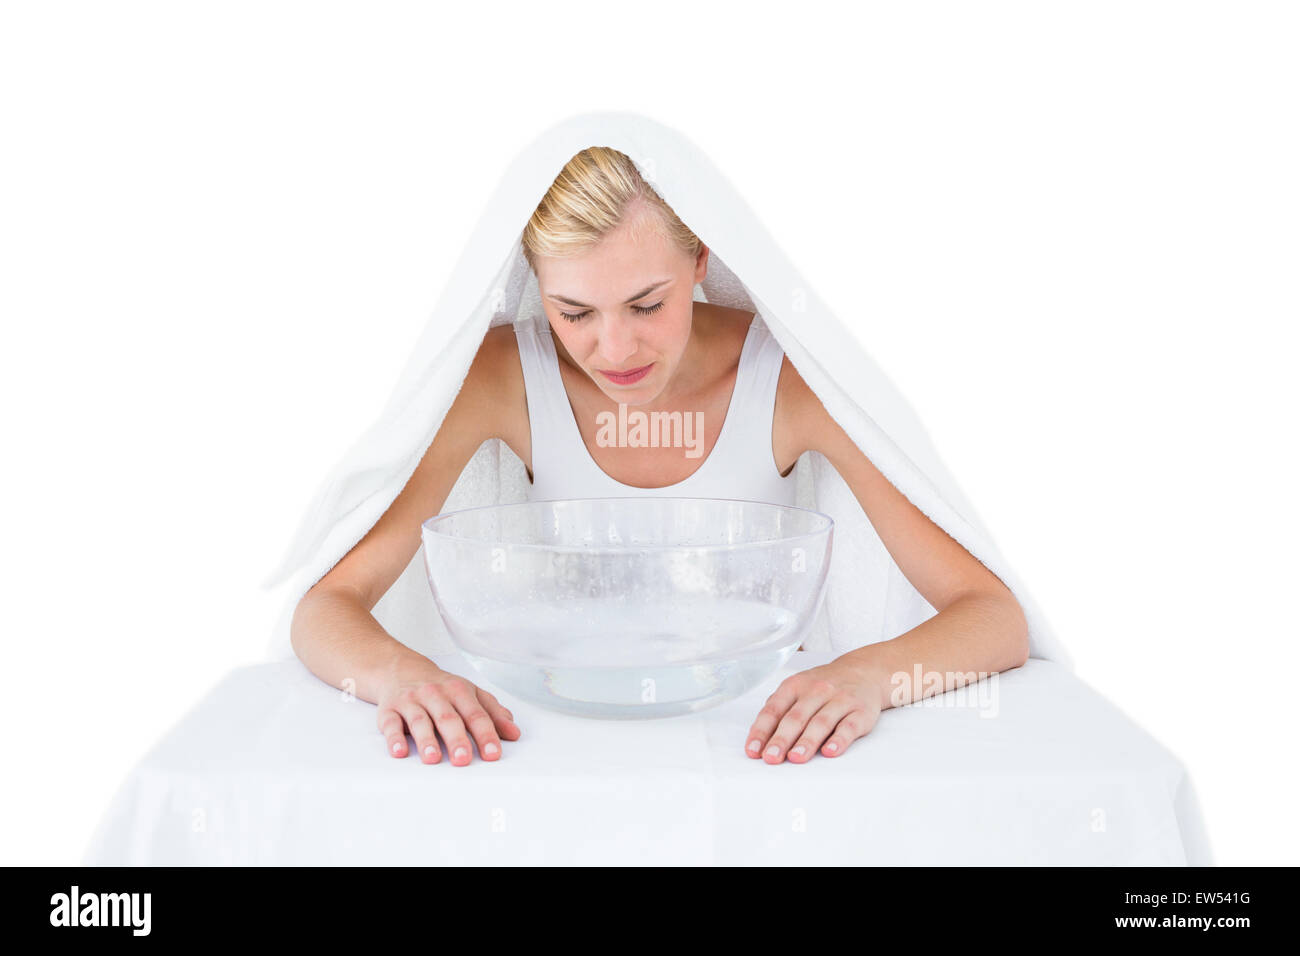 Blonde woman inhaling herbal medicine Stock Photo